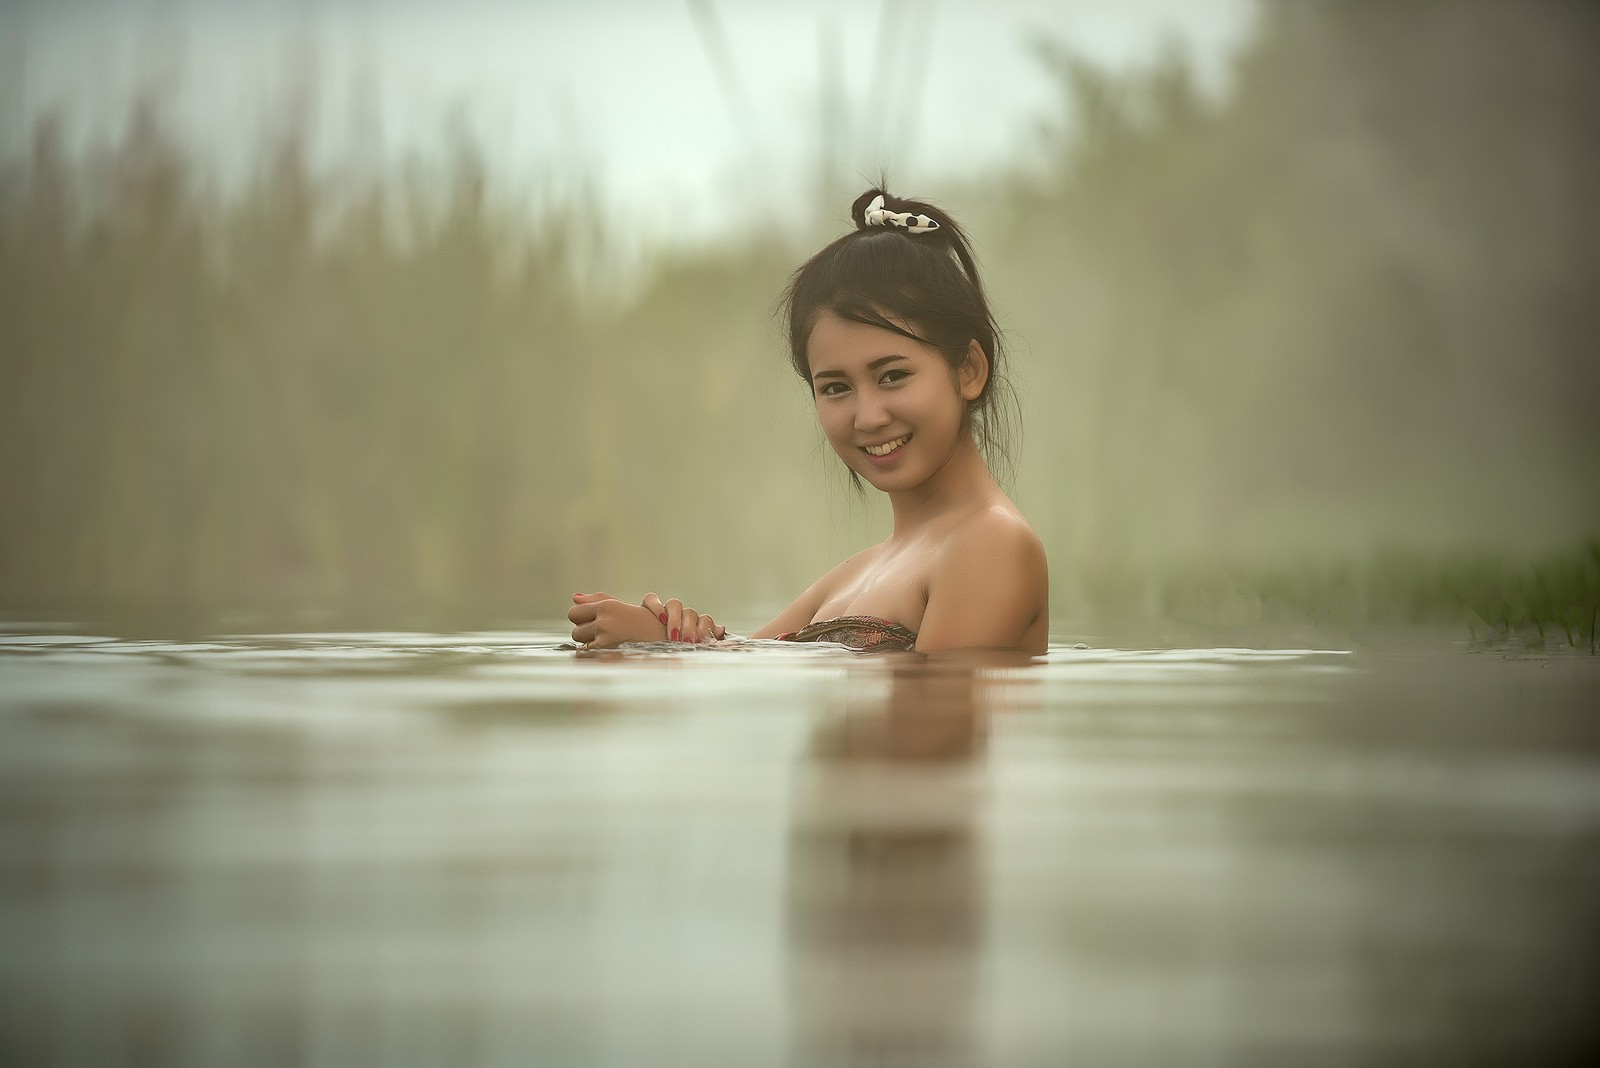 Water women thailand asian smiling brunette looking away portrait